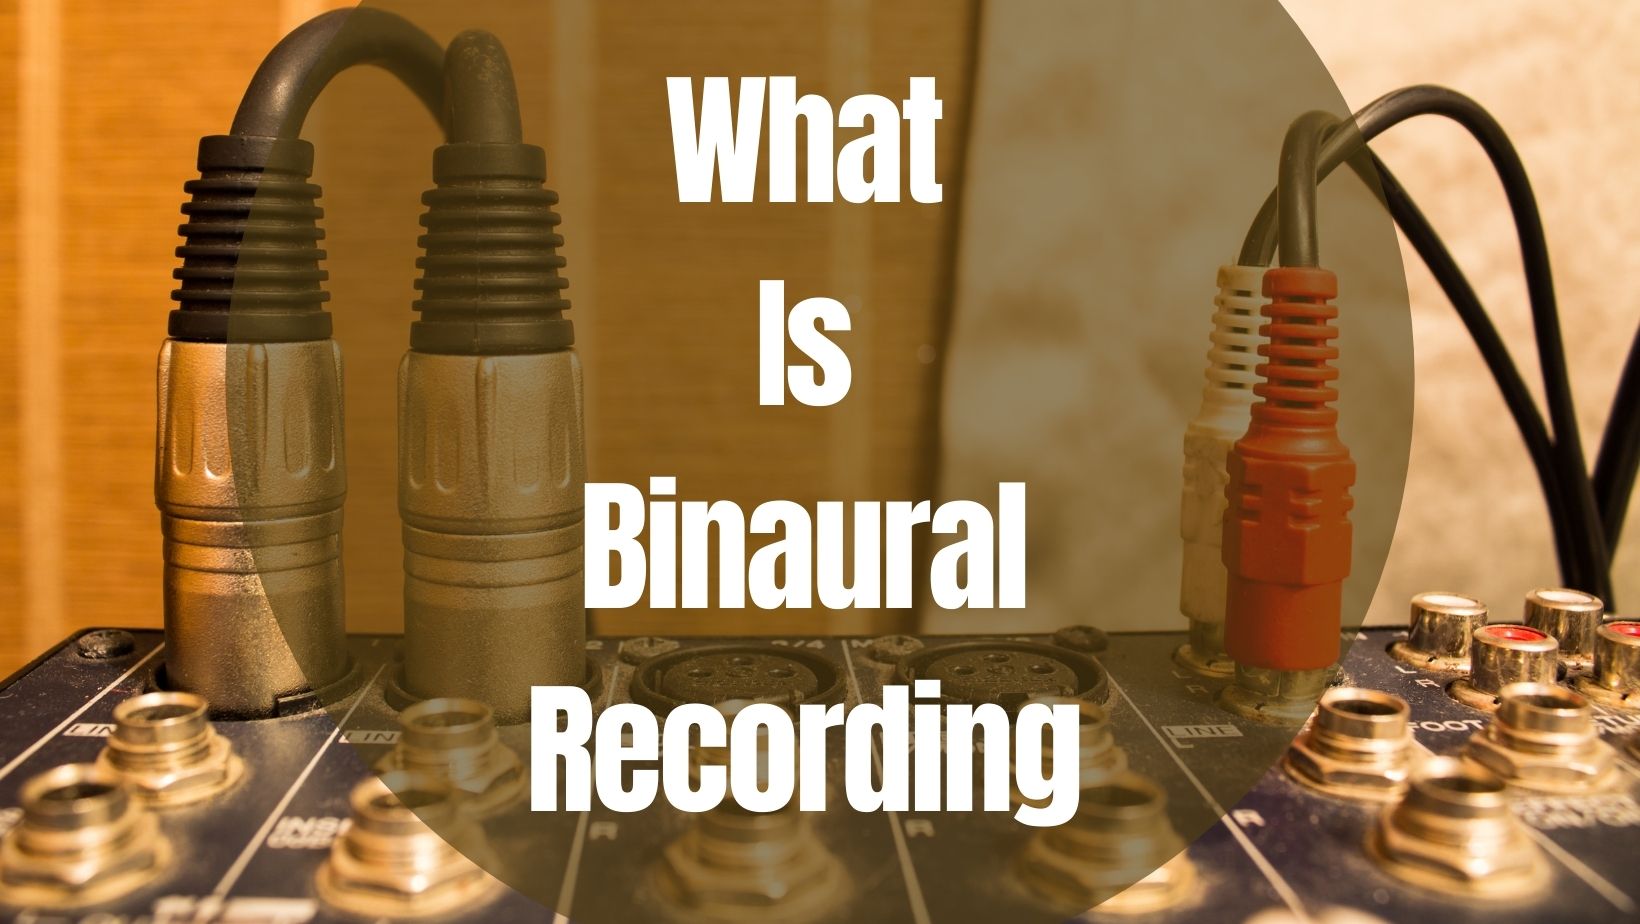 binaural recording setup